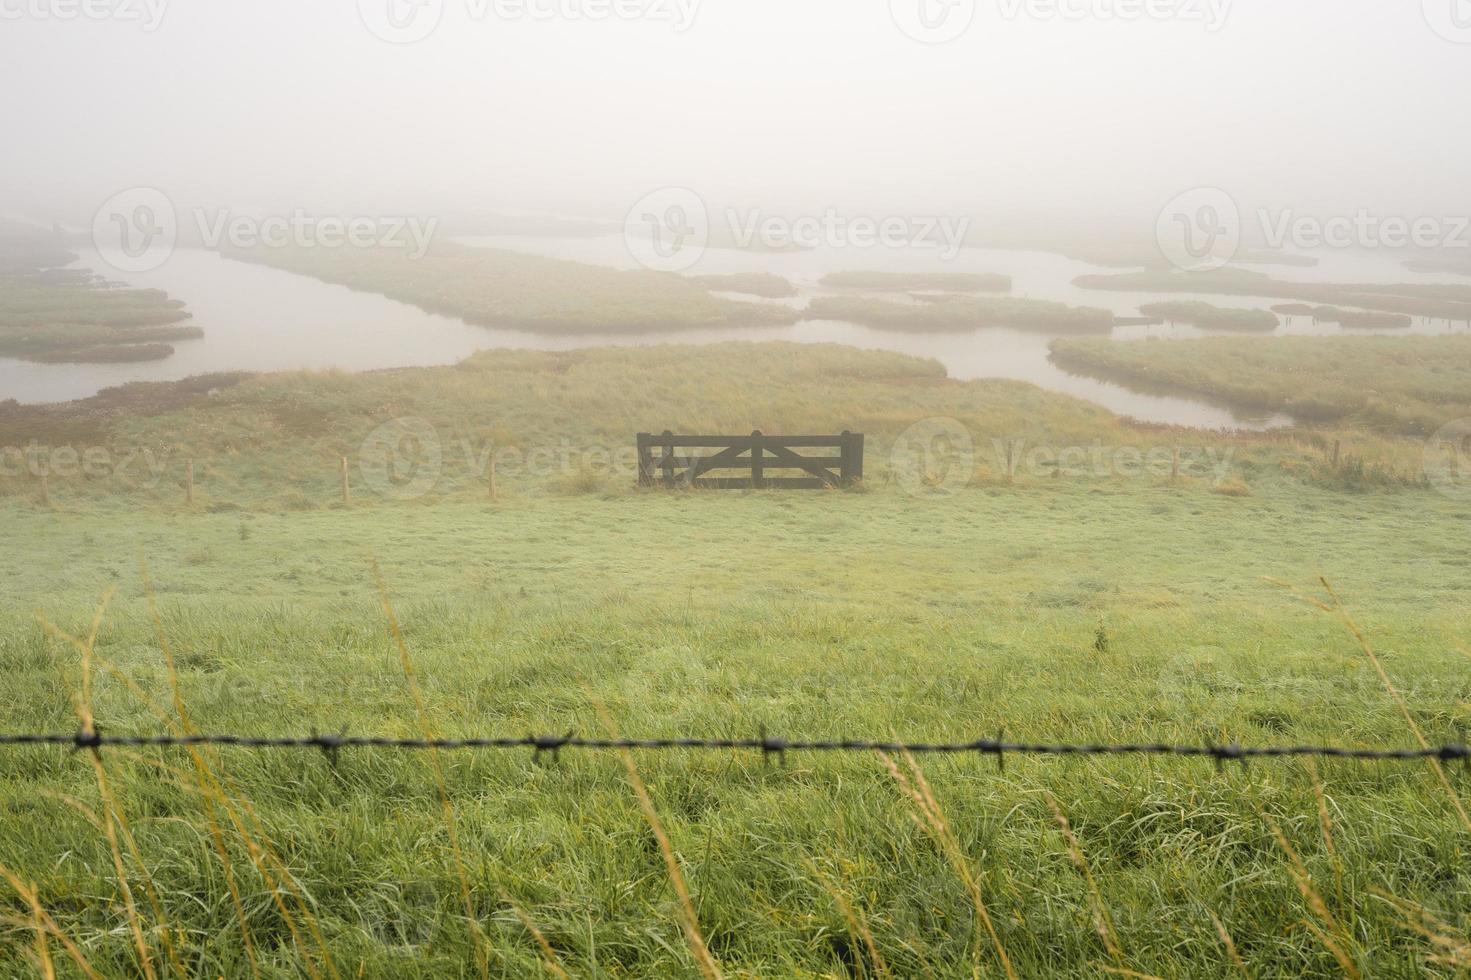 Foggy day over the wetlands, Burgh-Haamstede, Zeeland, The Netherlands. photo